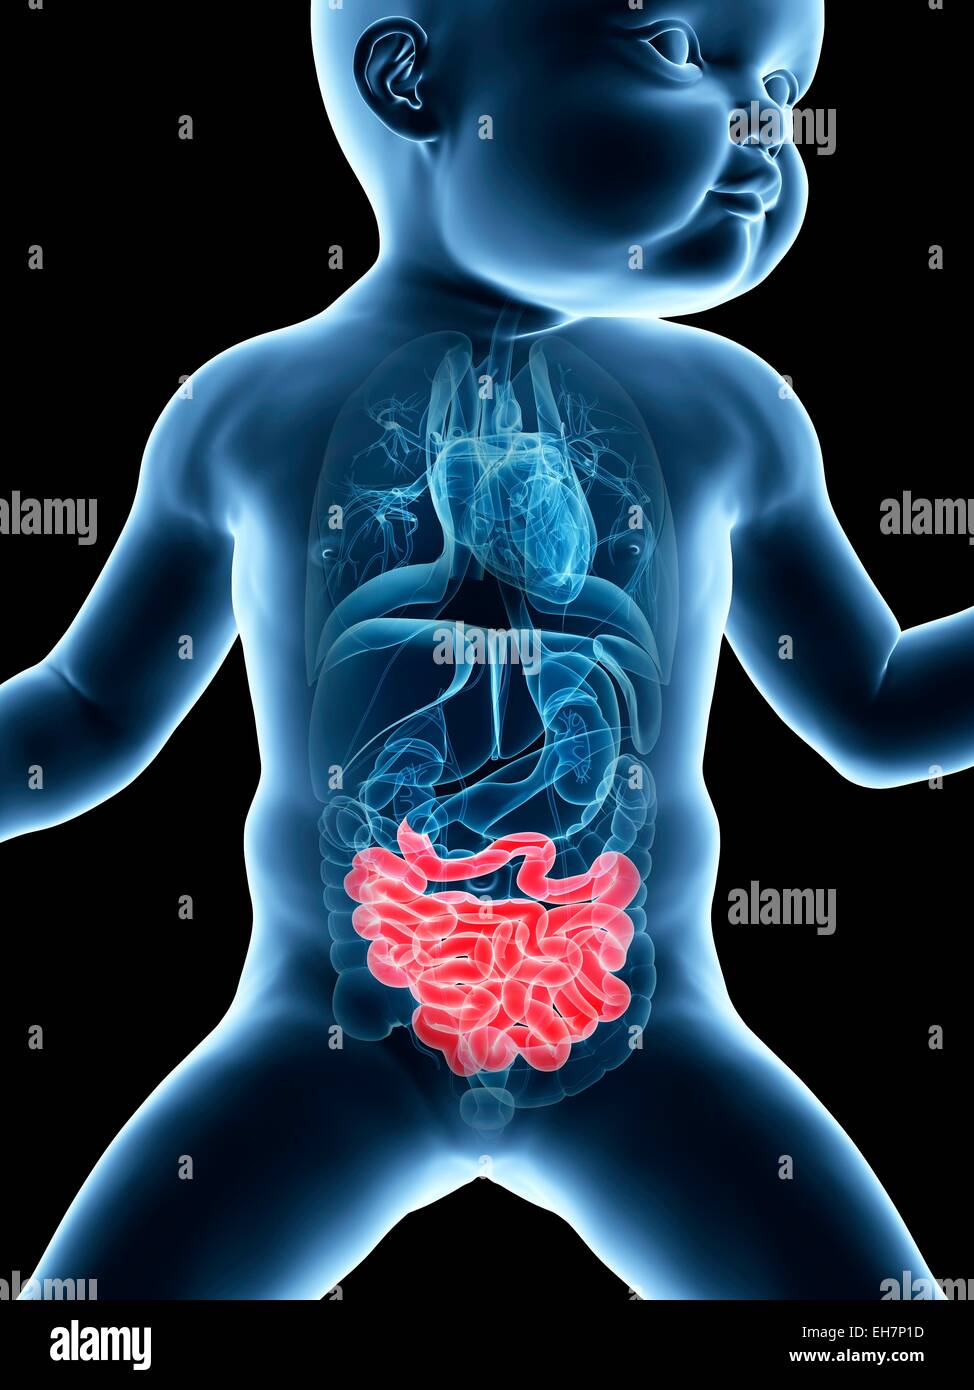 Baby's intestine, illustration Stock Photo - Alamy